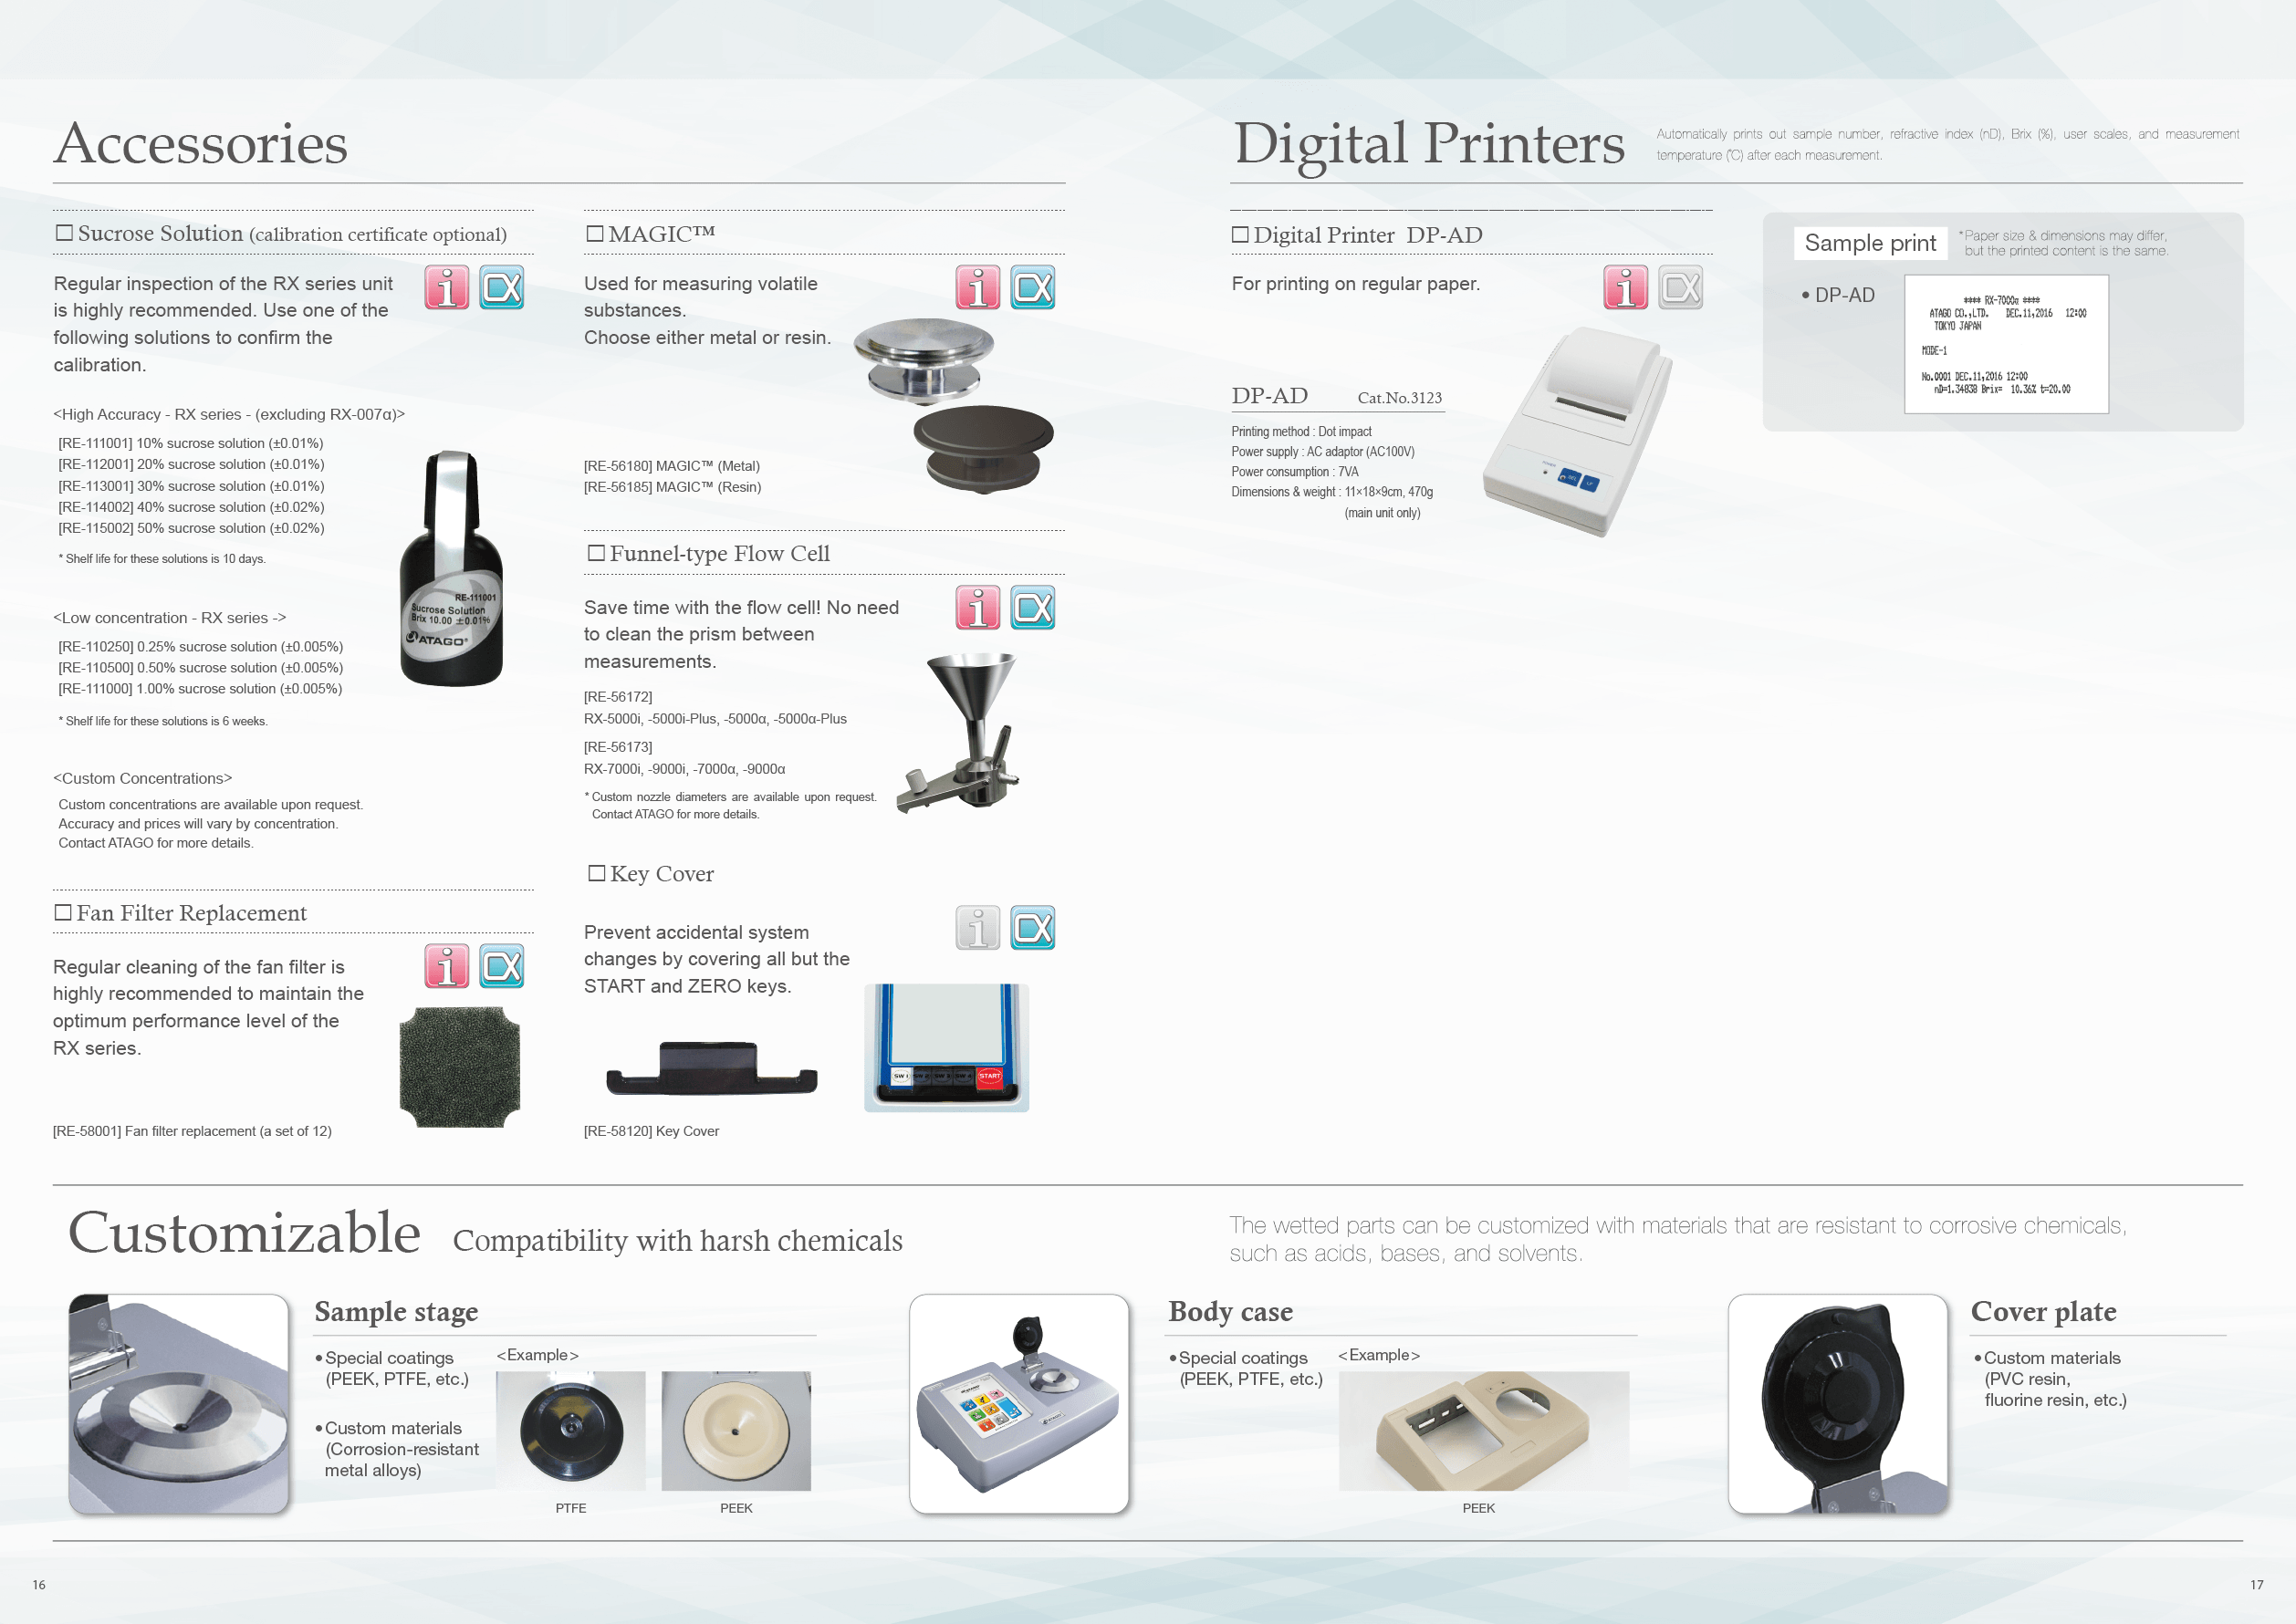 Accessories / Digital Printers / Customizable